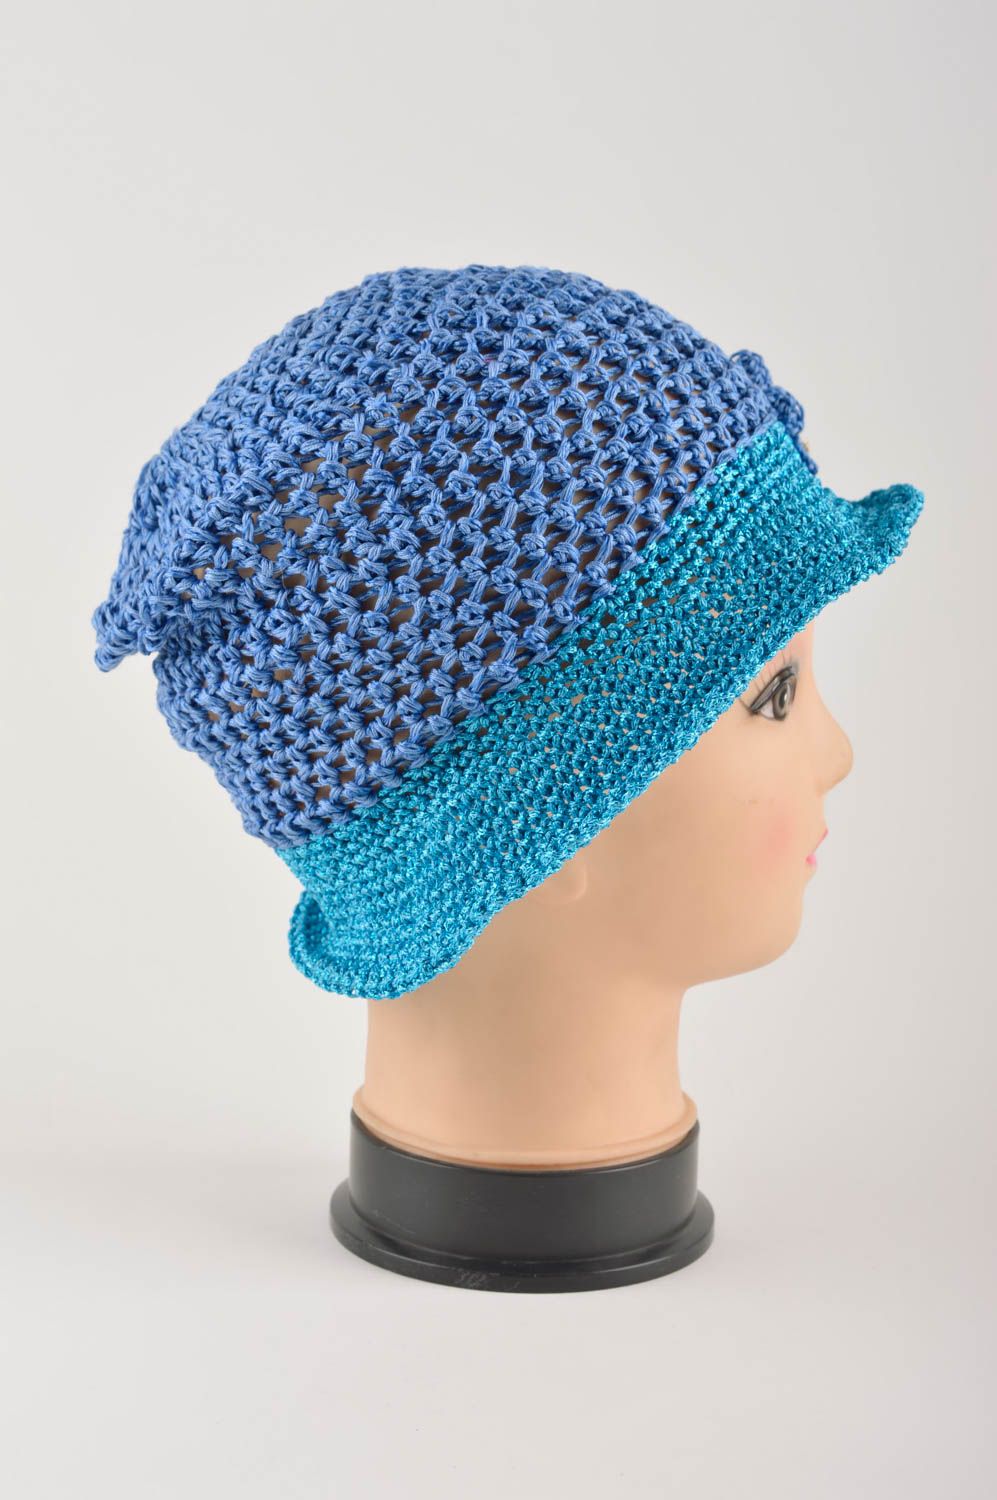 Handmade crochet hat summer hat ladies sun hats designer accessories gift ideas photo 4